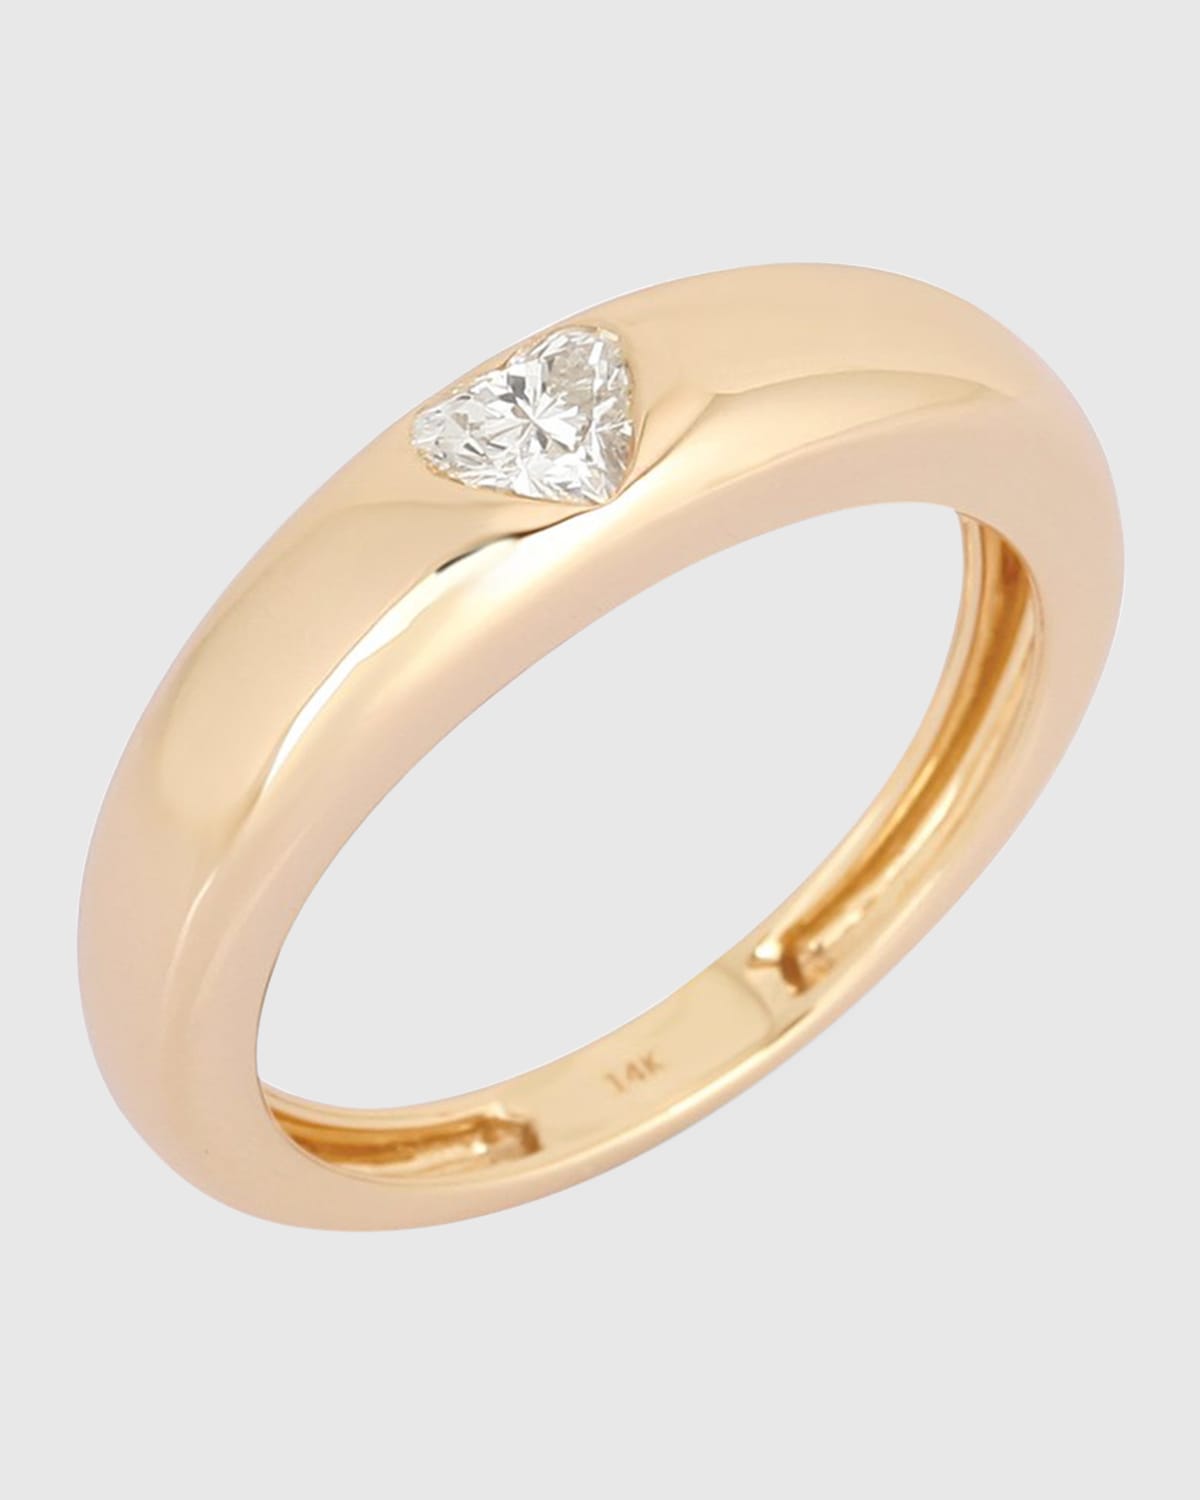 Kastel Jewelry Heart Diamond Ring in 14k Yellow Gold, Size 7